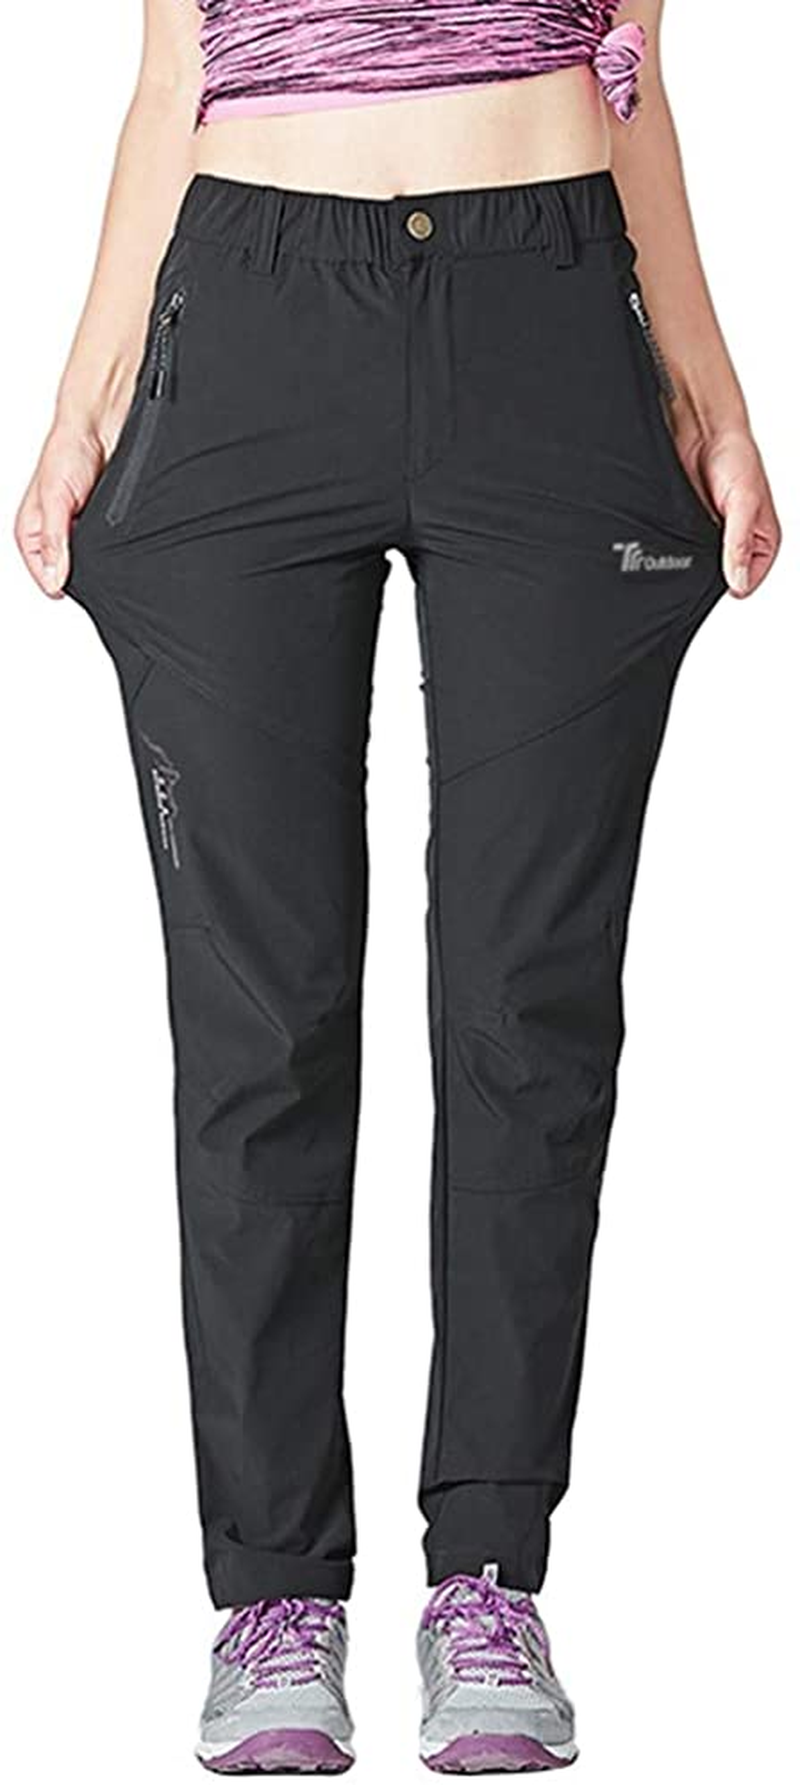 KUTOOK Women's Hiking Pants Lightweight Quick Dry Water Resistant